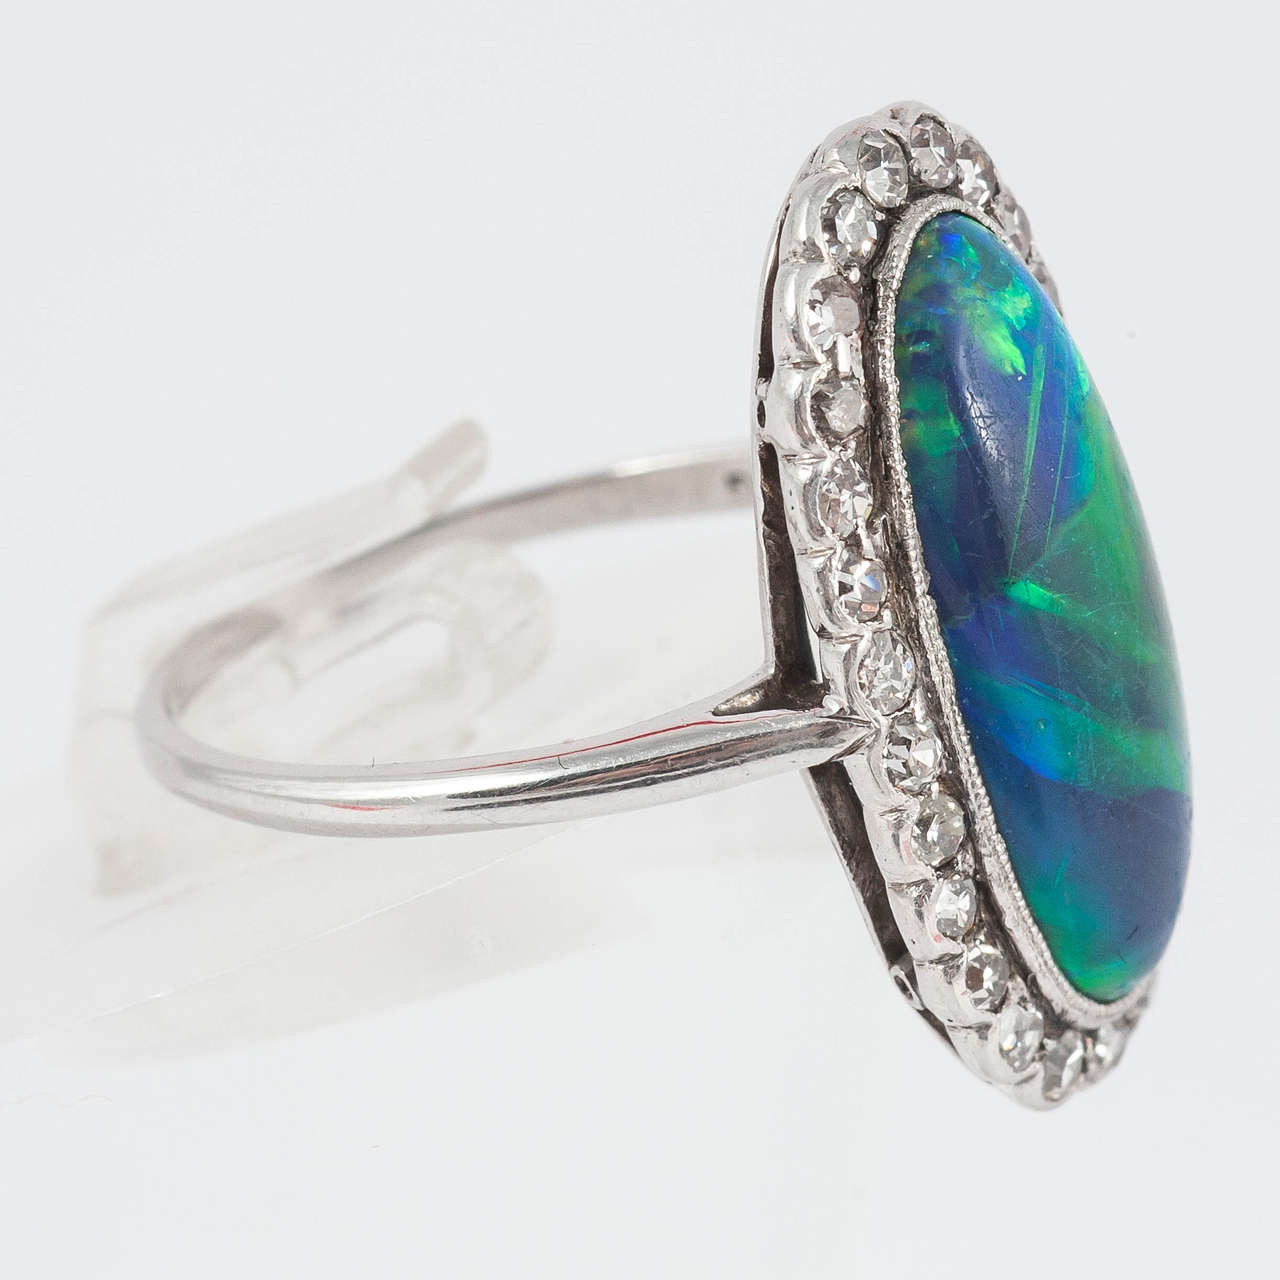 Black Opal ring of Lightning Ridge origin surrounded by fine Diamonds set in Platinum.

Finger size N 1/4